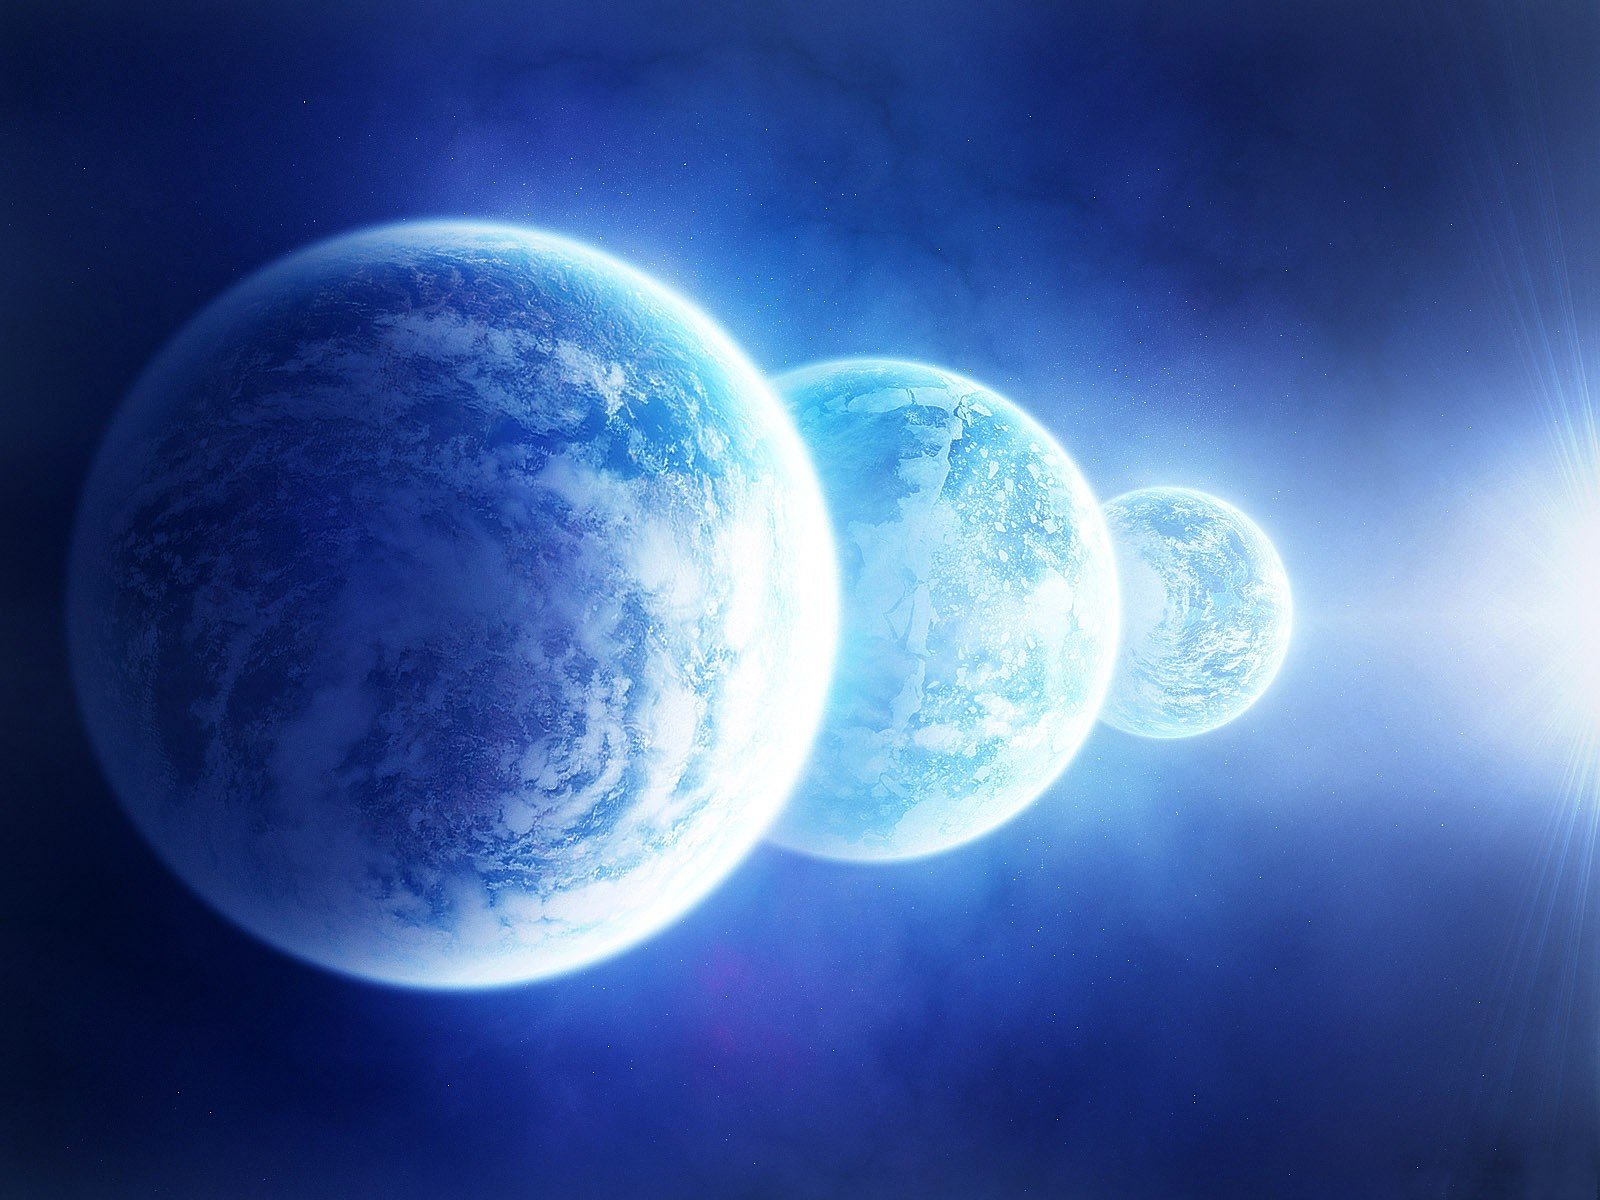 space 2 blue planet wallpaper